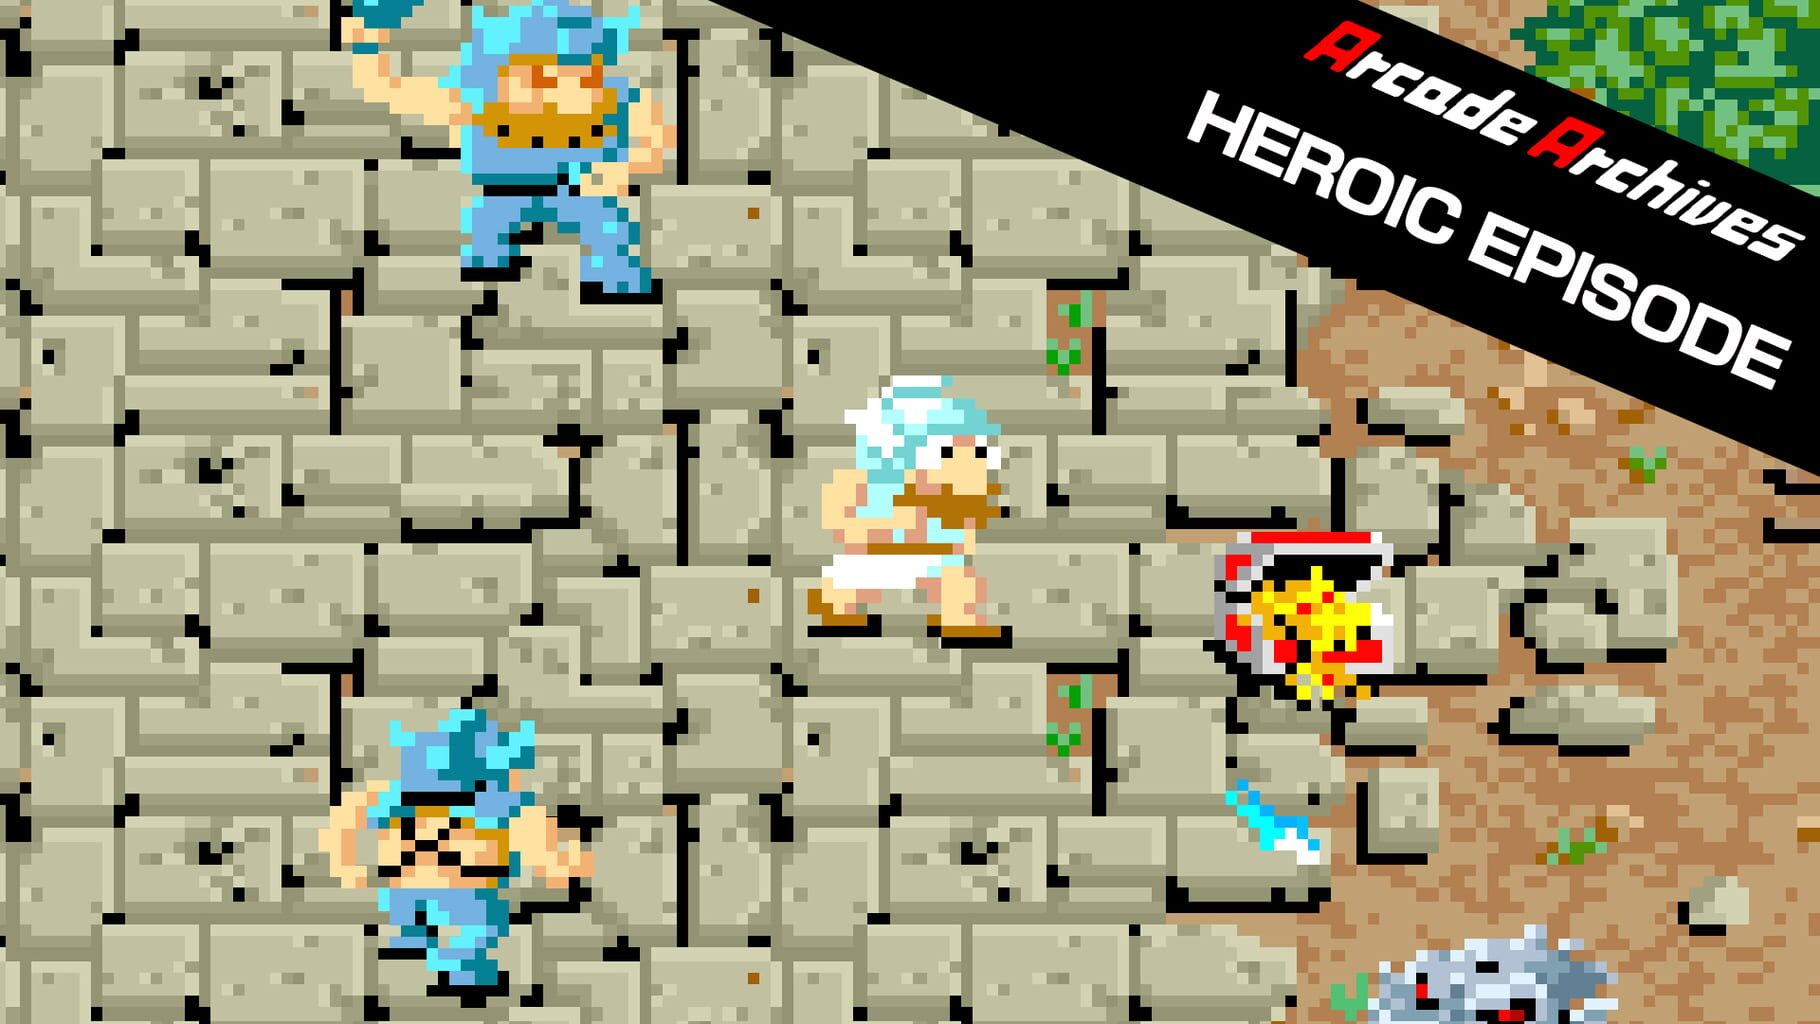 Arcade Archives: Heroic Episode artwork